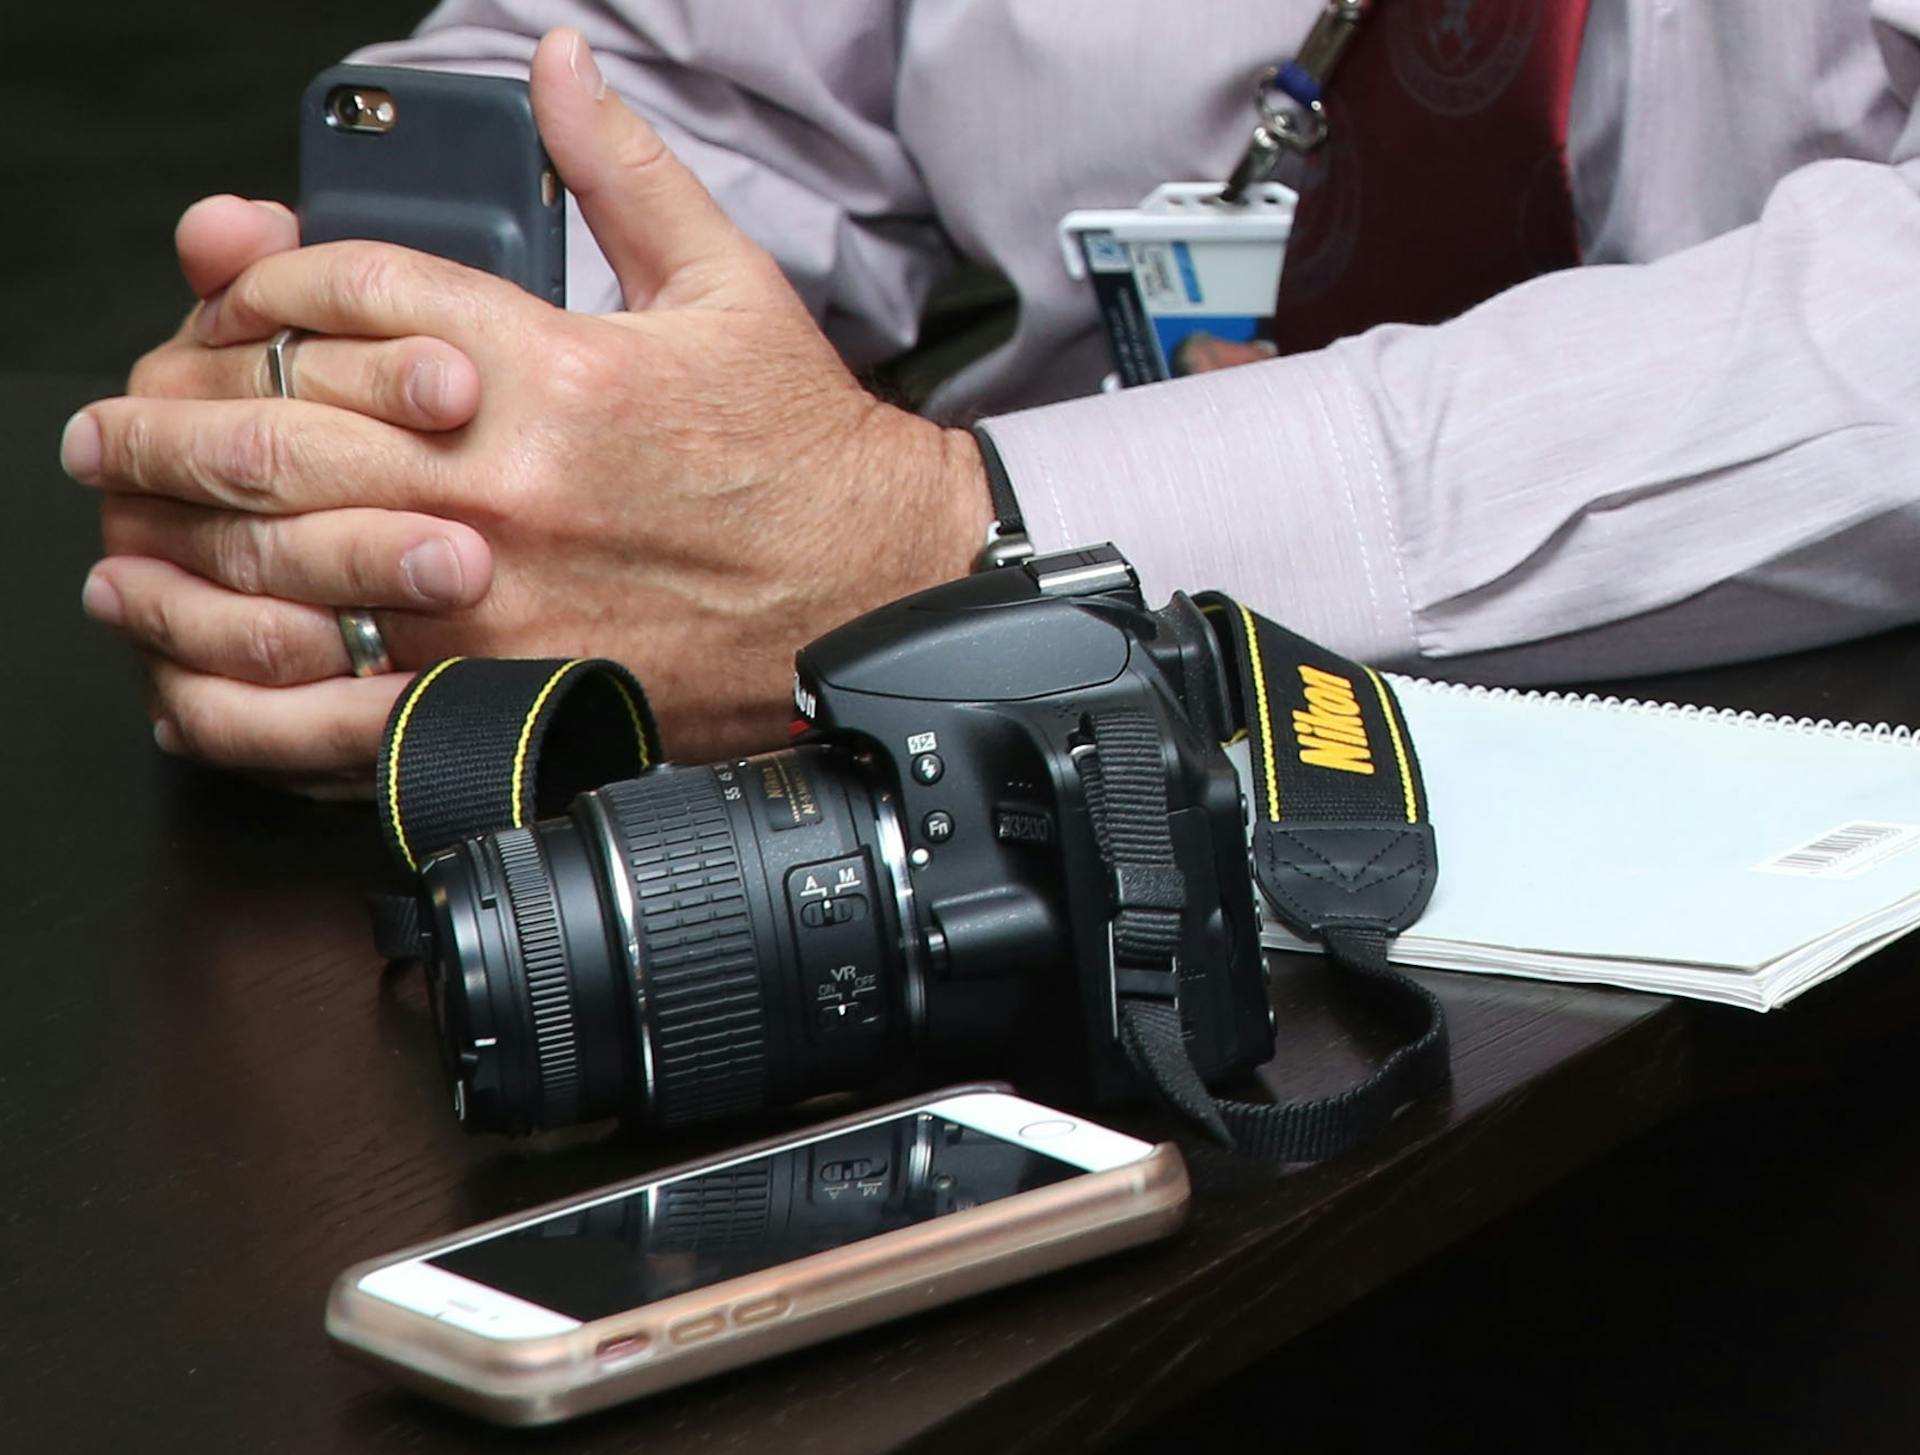 Black Nikon Dslr Camera Beside Person's Hands